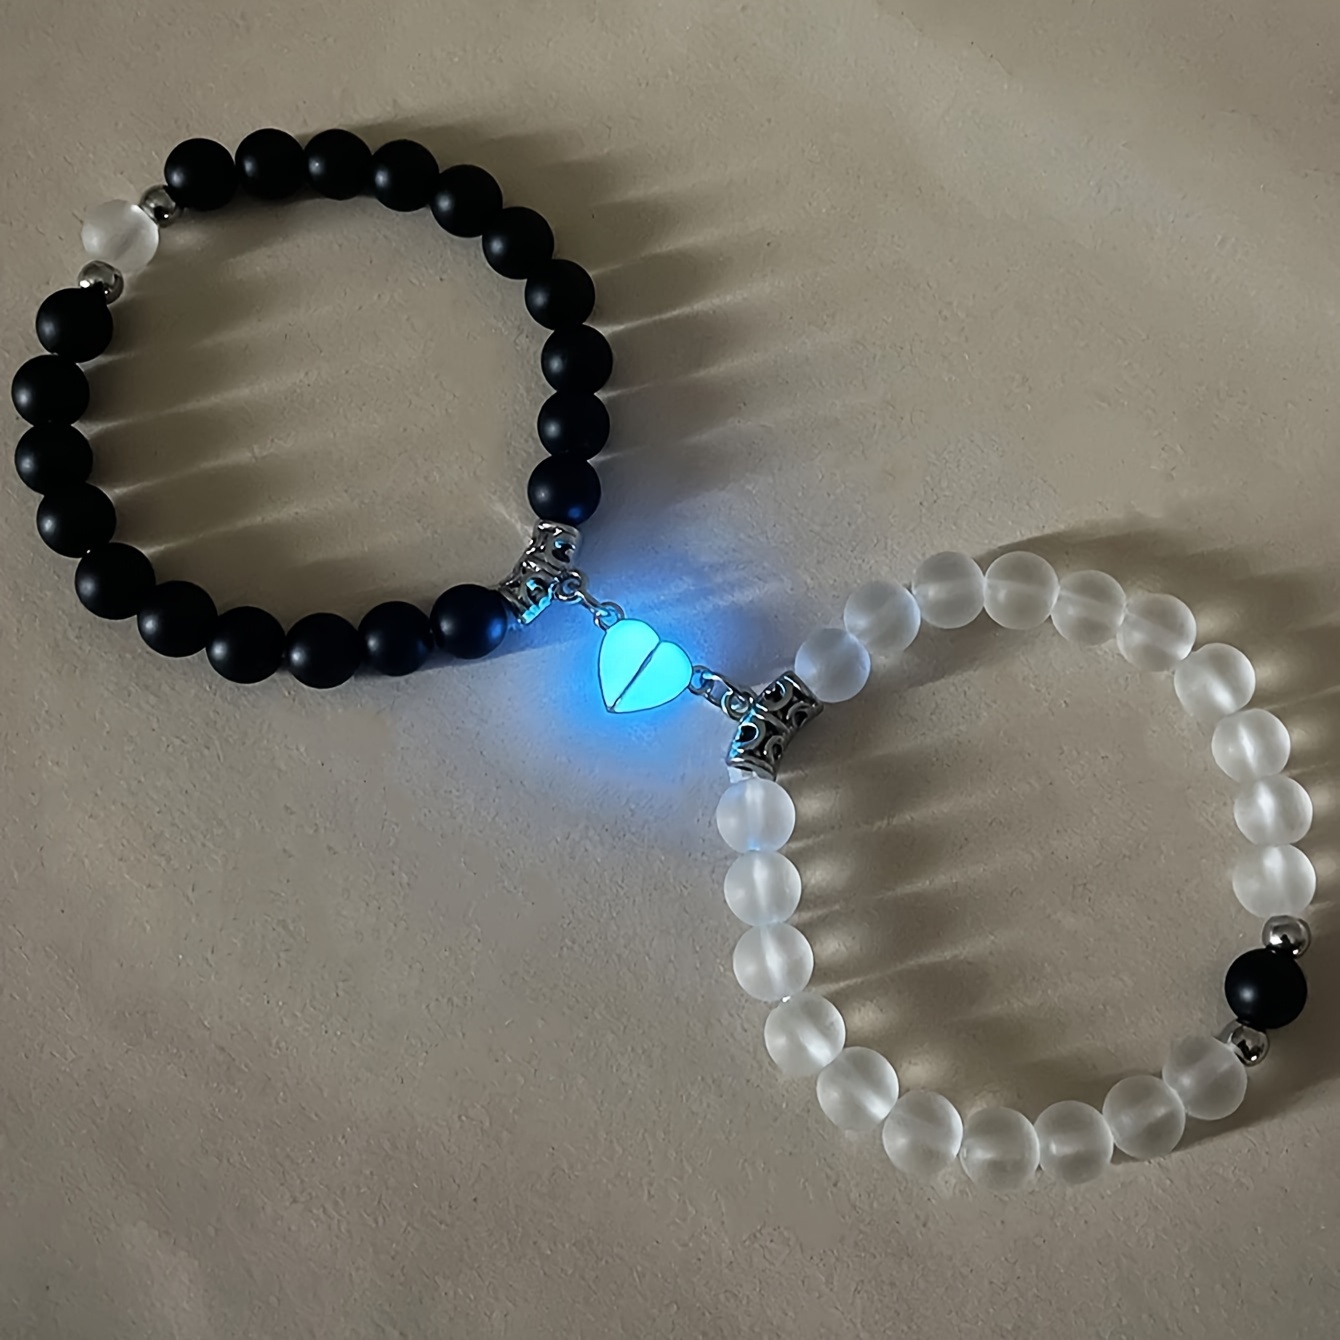 

2pcs/set Luminous Heart Beads Bracelet For Lovers, Natural Stone Heart Magnetic Couple Bracelet, Friendship Fashion Jewelry Gift For Men Women